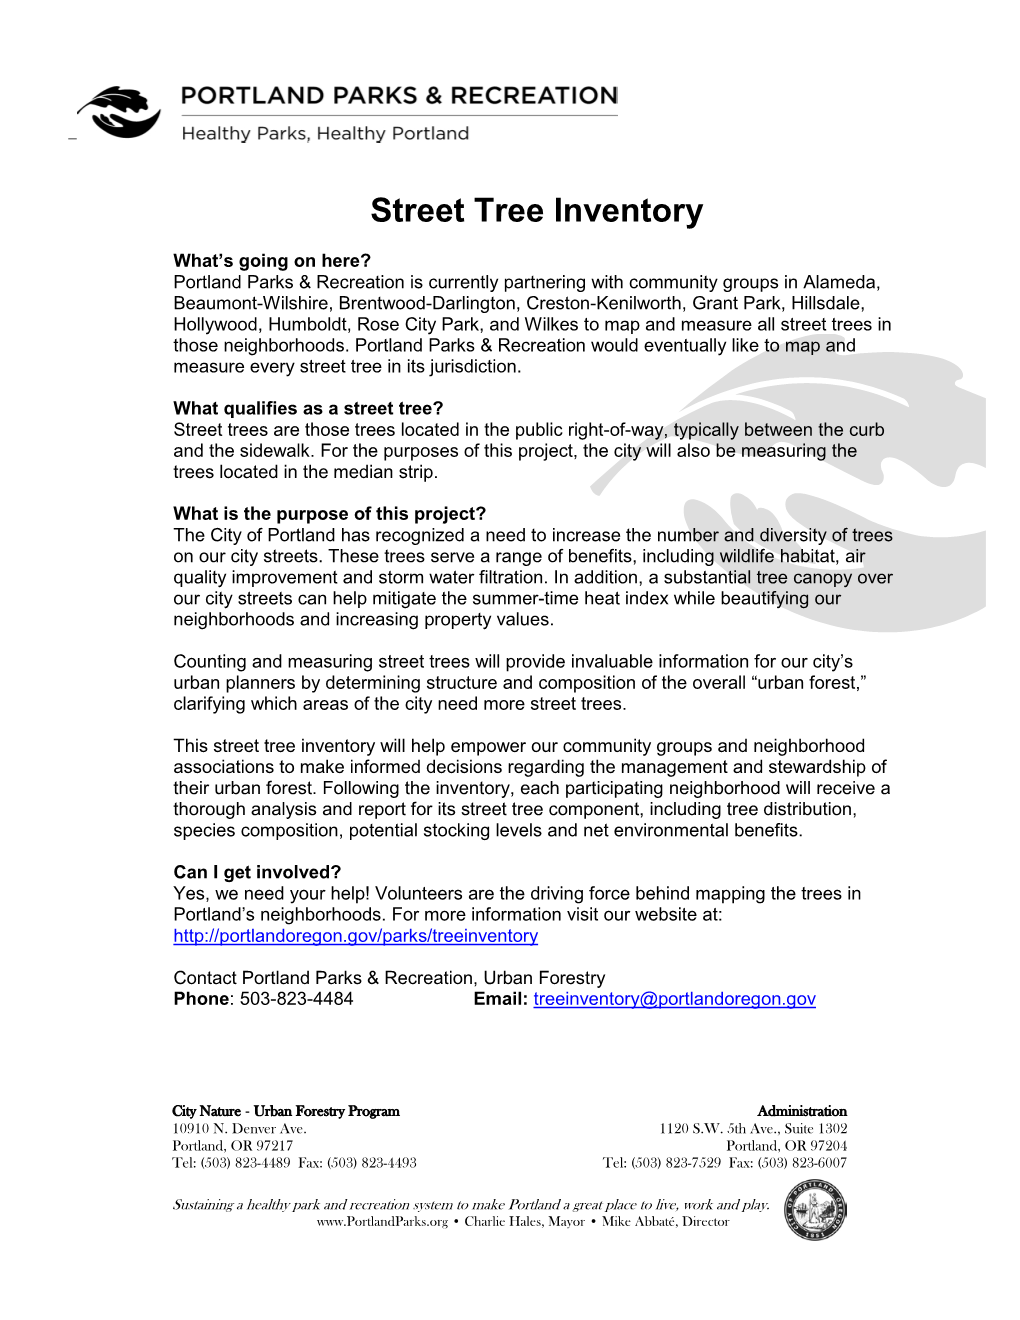 Street Tree Inventory